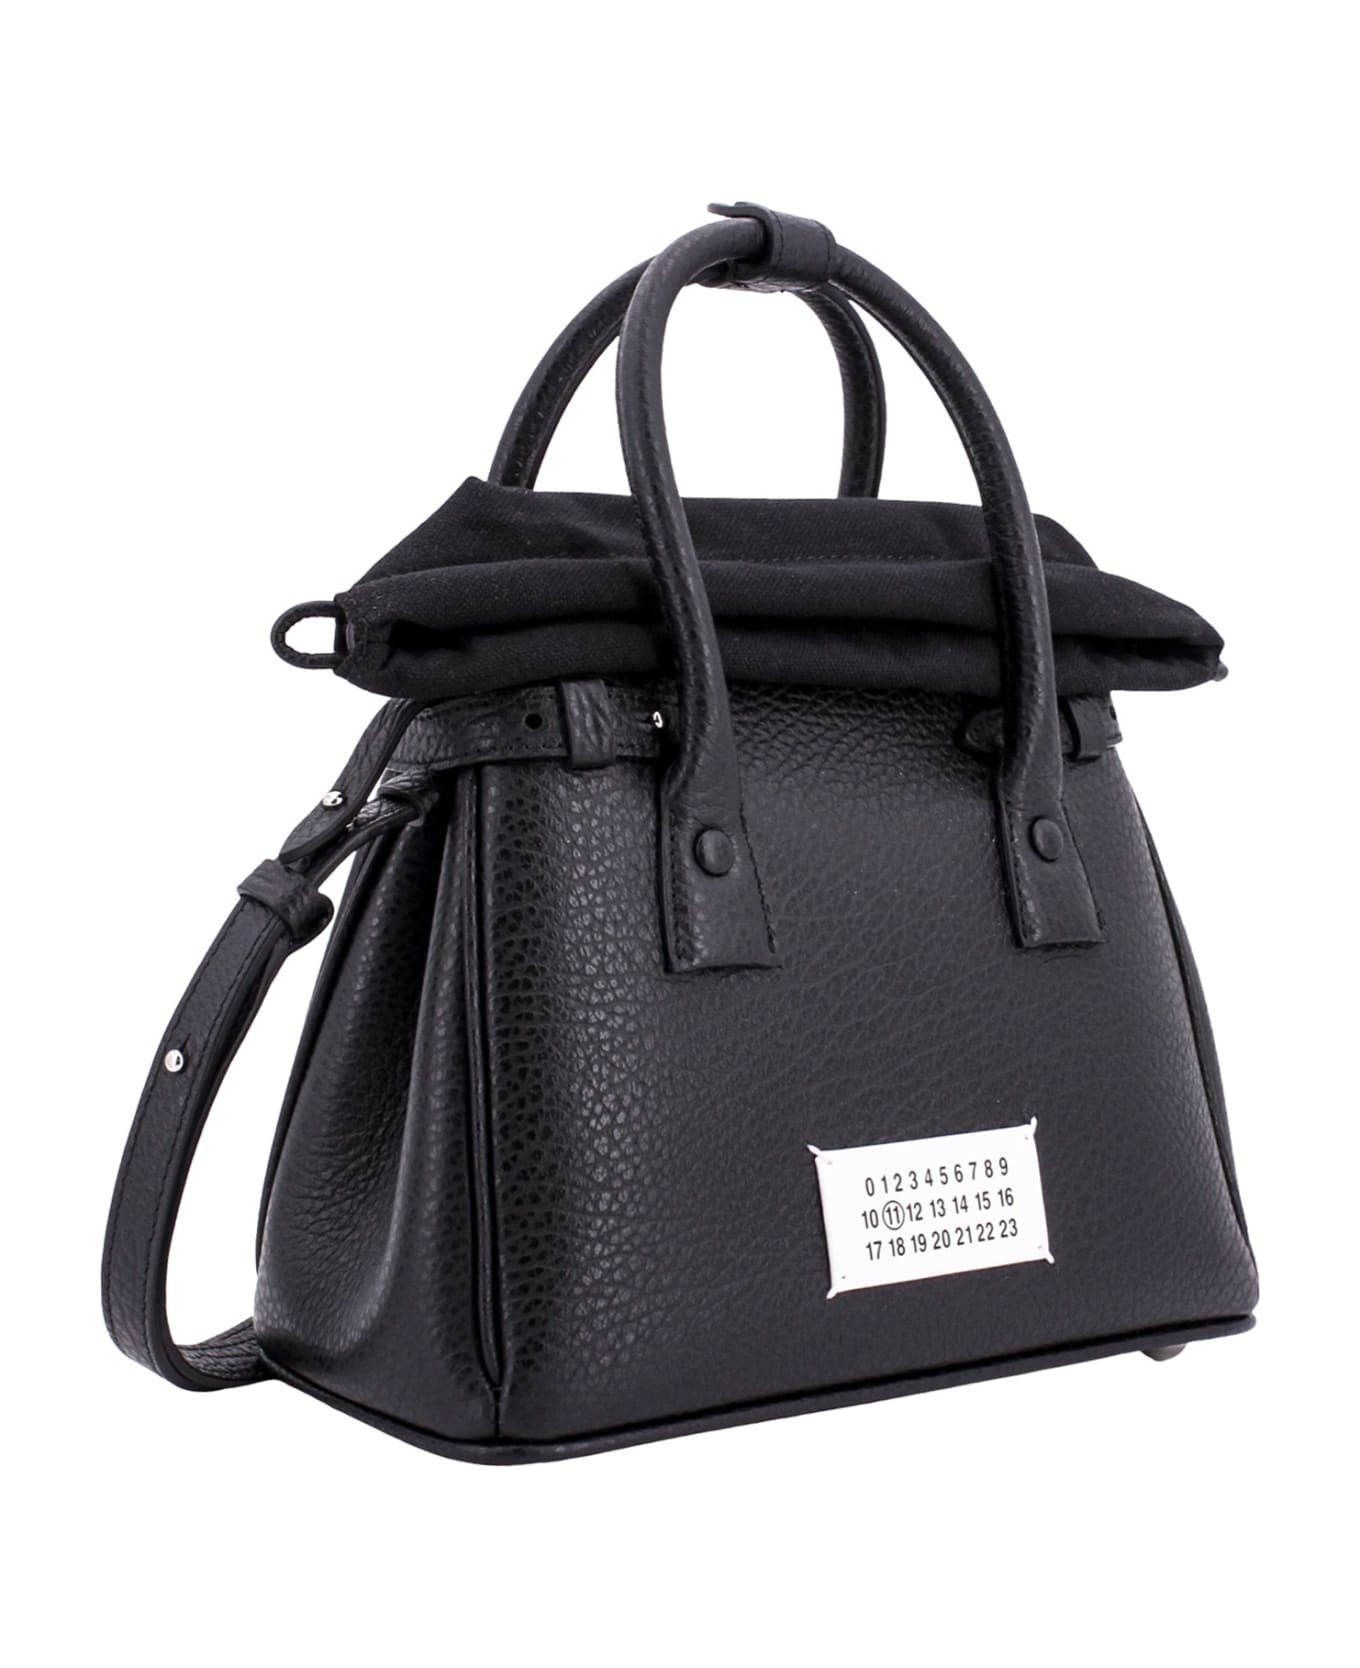 Maison Margiela 5ac Mini Drawstring Bag - Black